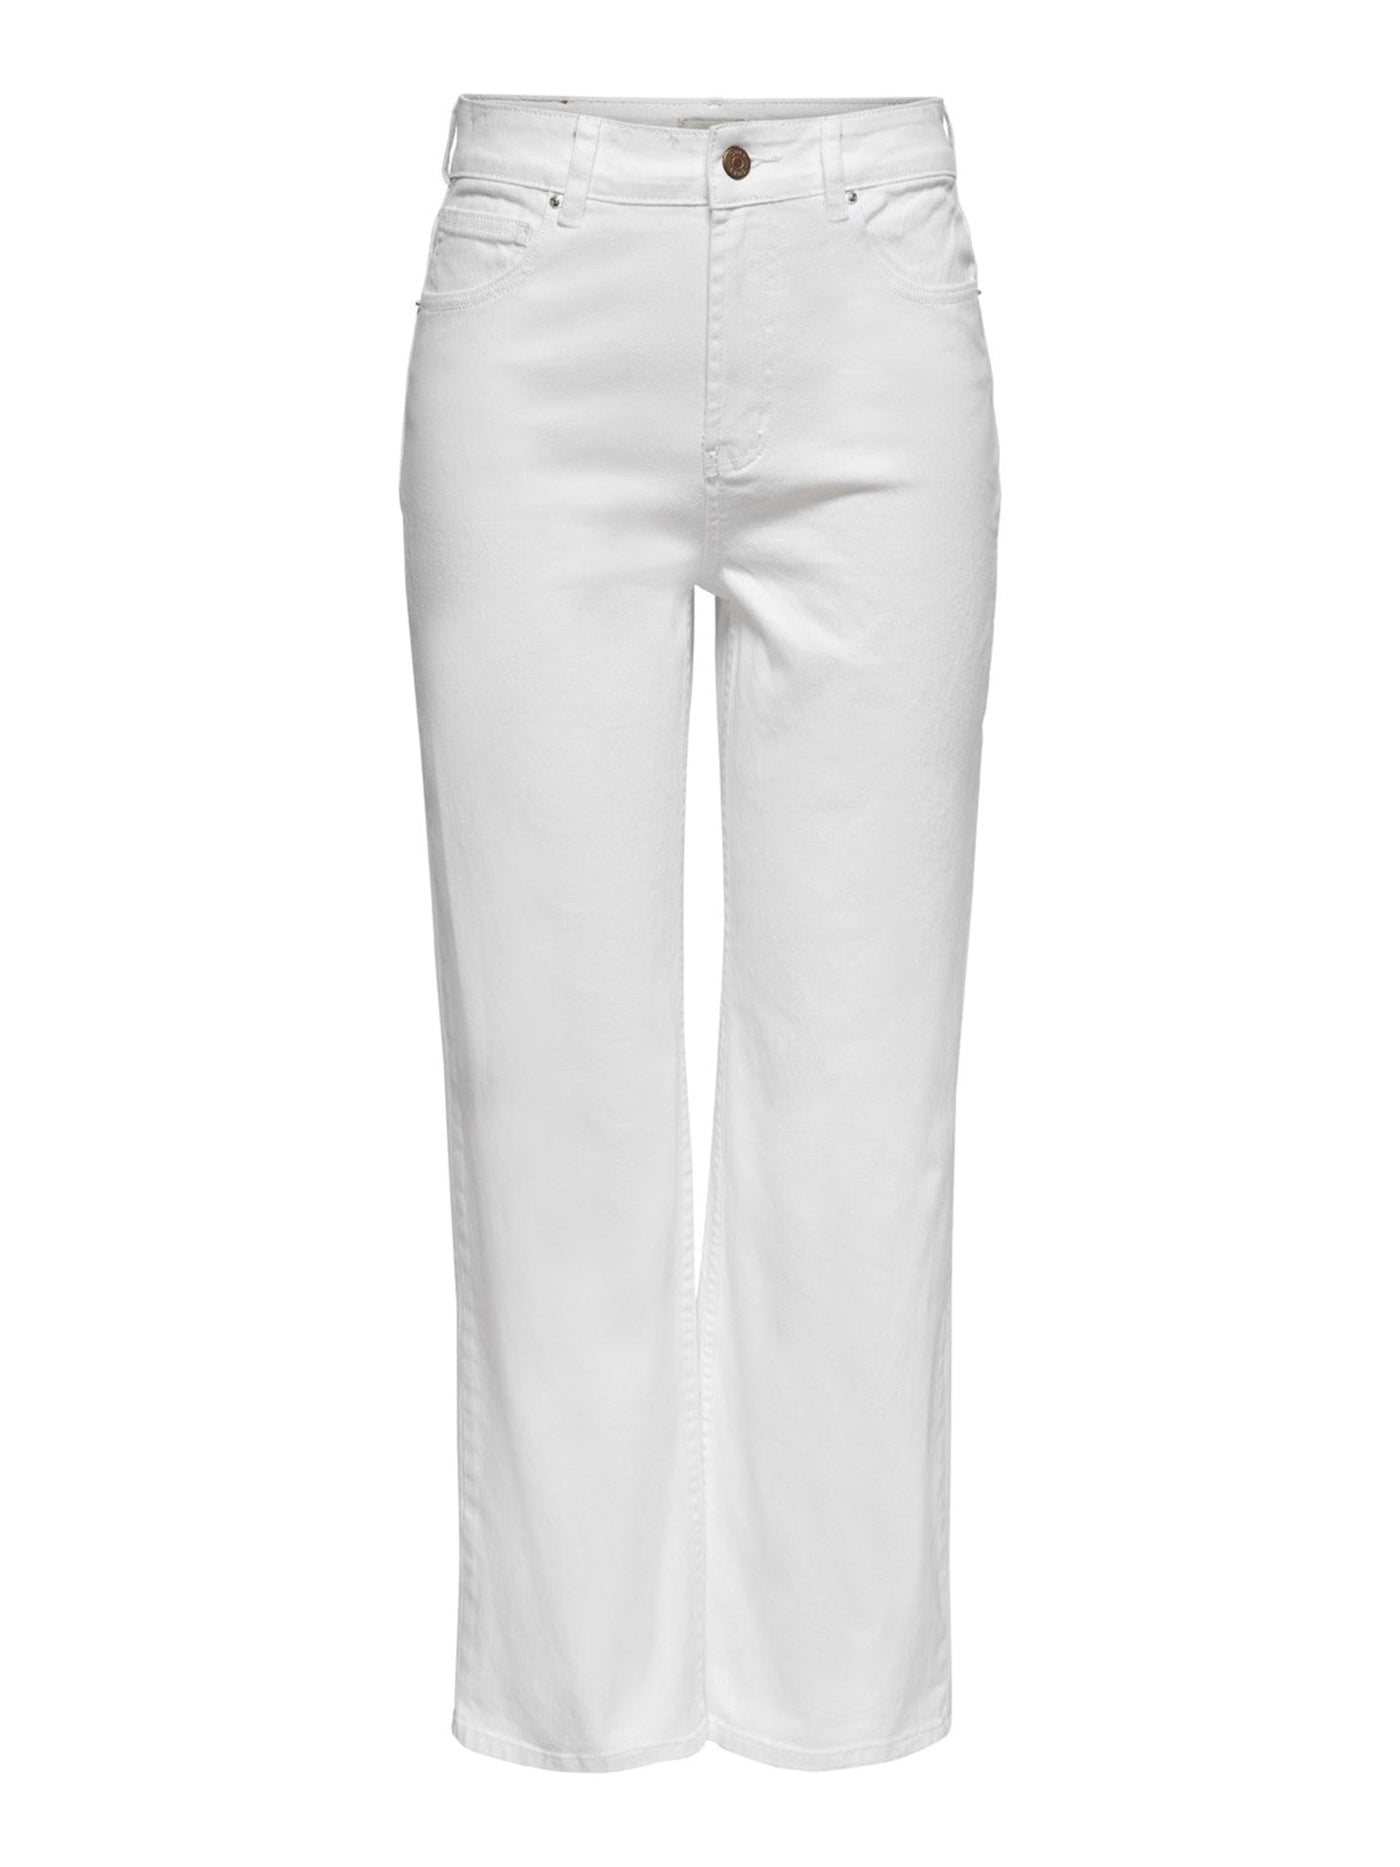 Brede high waist jeans - Hvit - ONLY 8